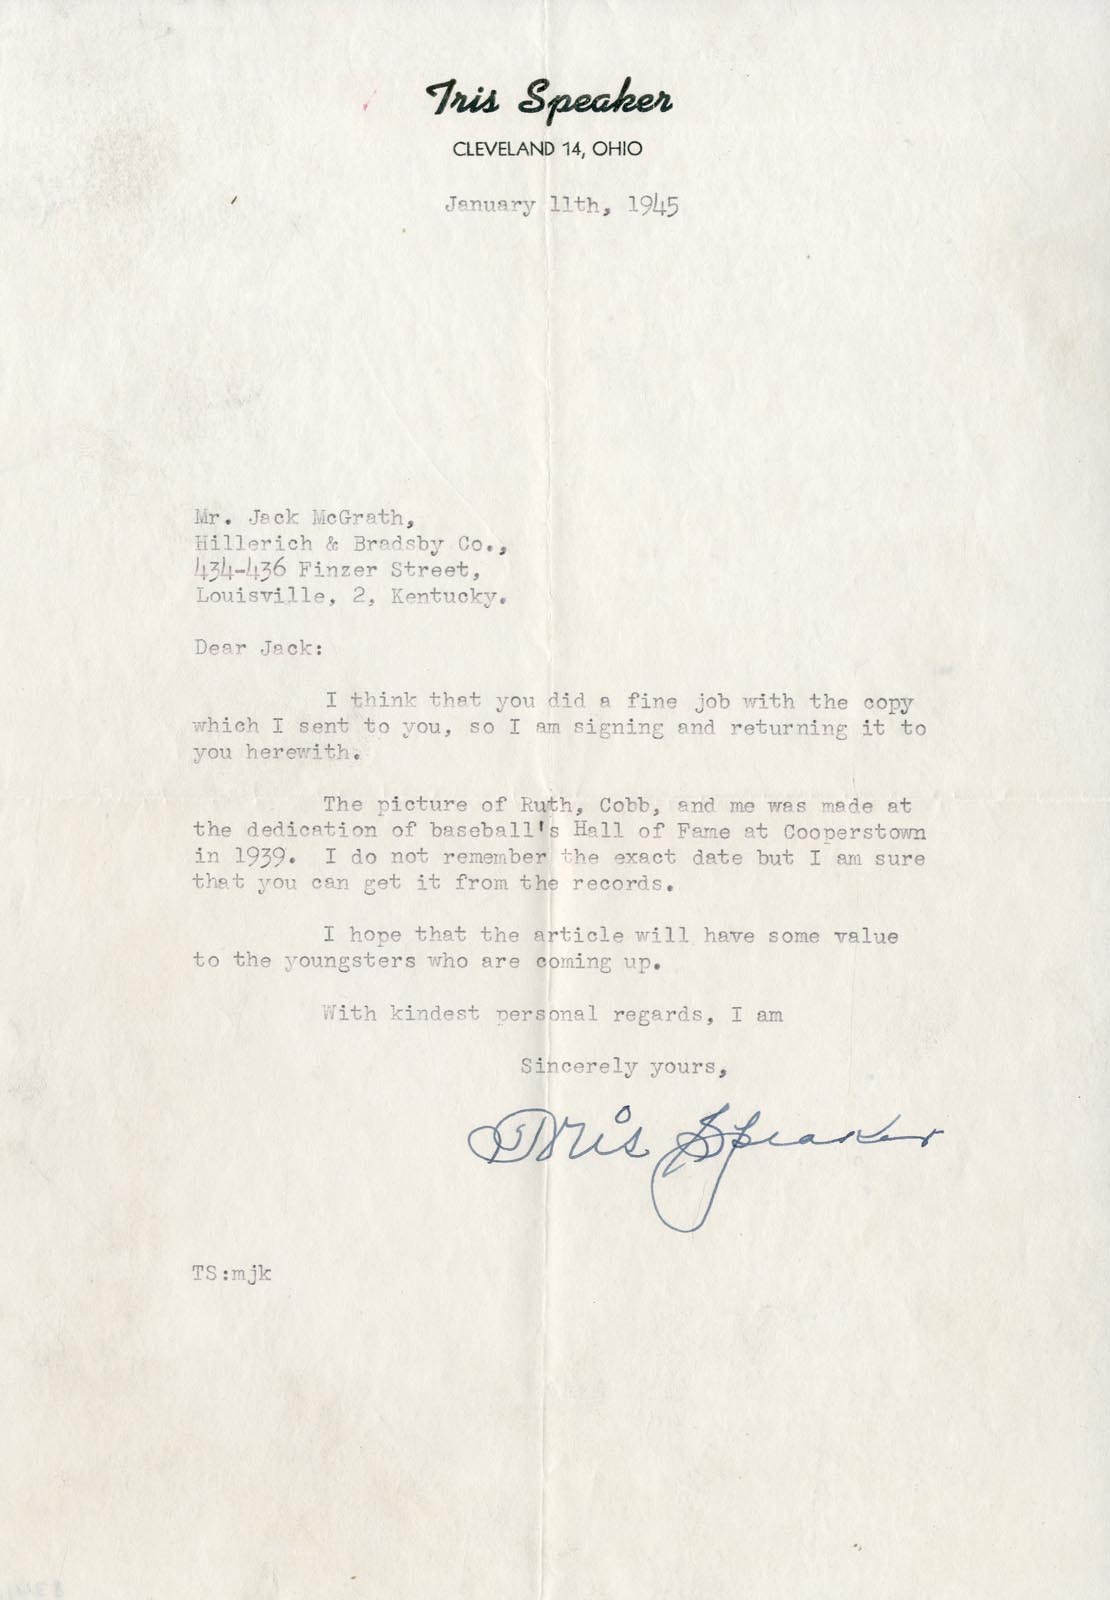 1945 Tris Speaker Letter w/1939 Ruth Cobb Baseball HOF Induction Content (PSA MINT 9)